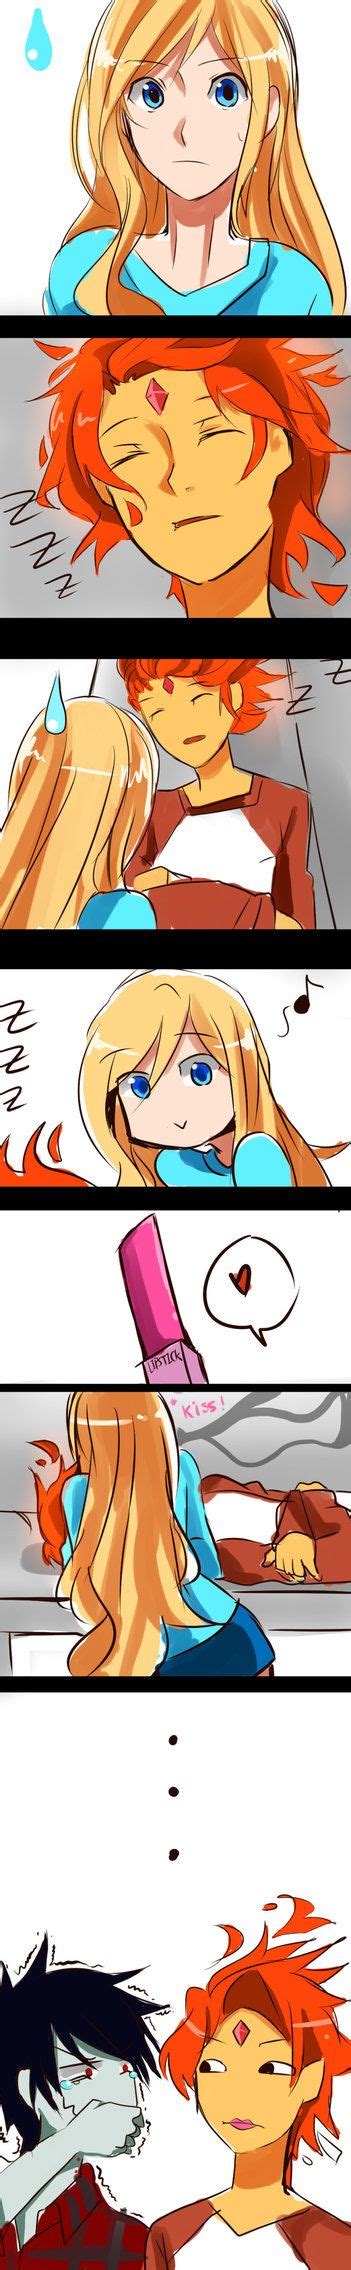 flame prince x fionna lips strip comic by animeandcartoonfan on deviantart adventure time